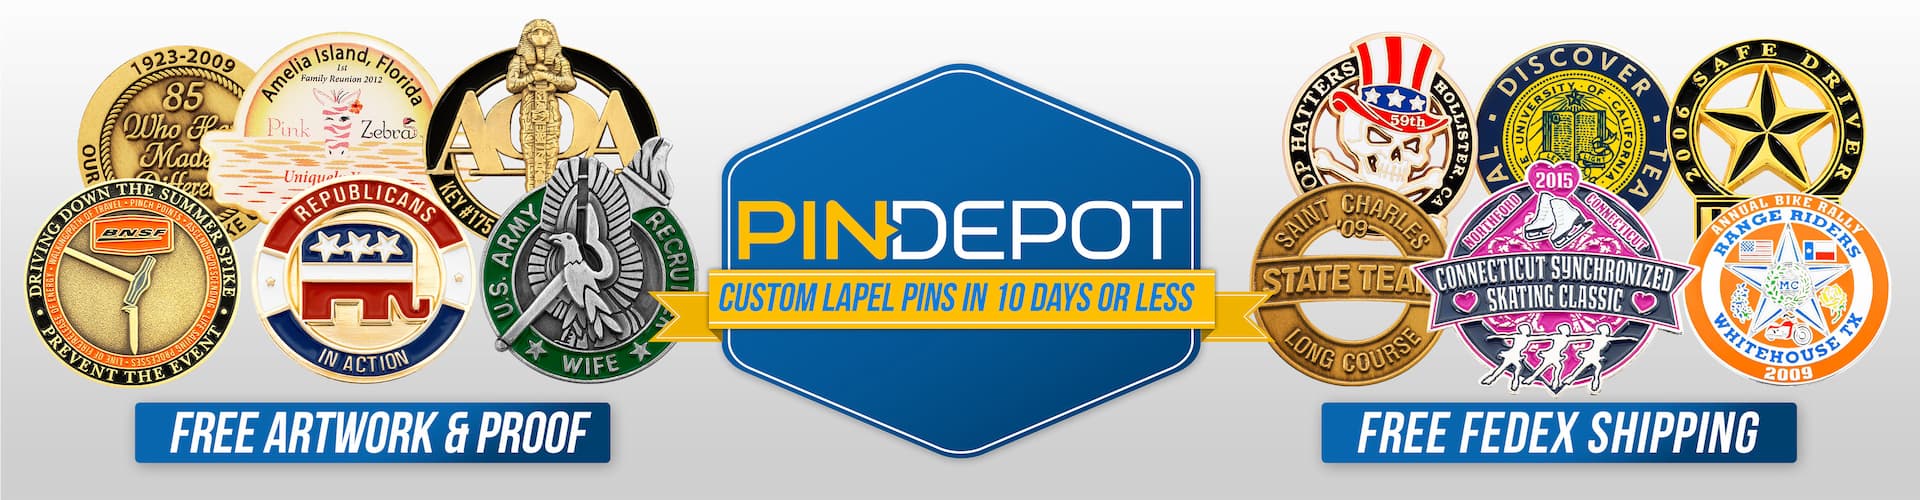 Make Custom Keychains - Pin Depot